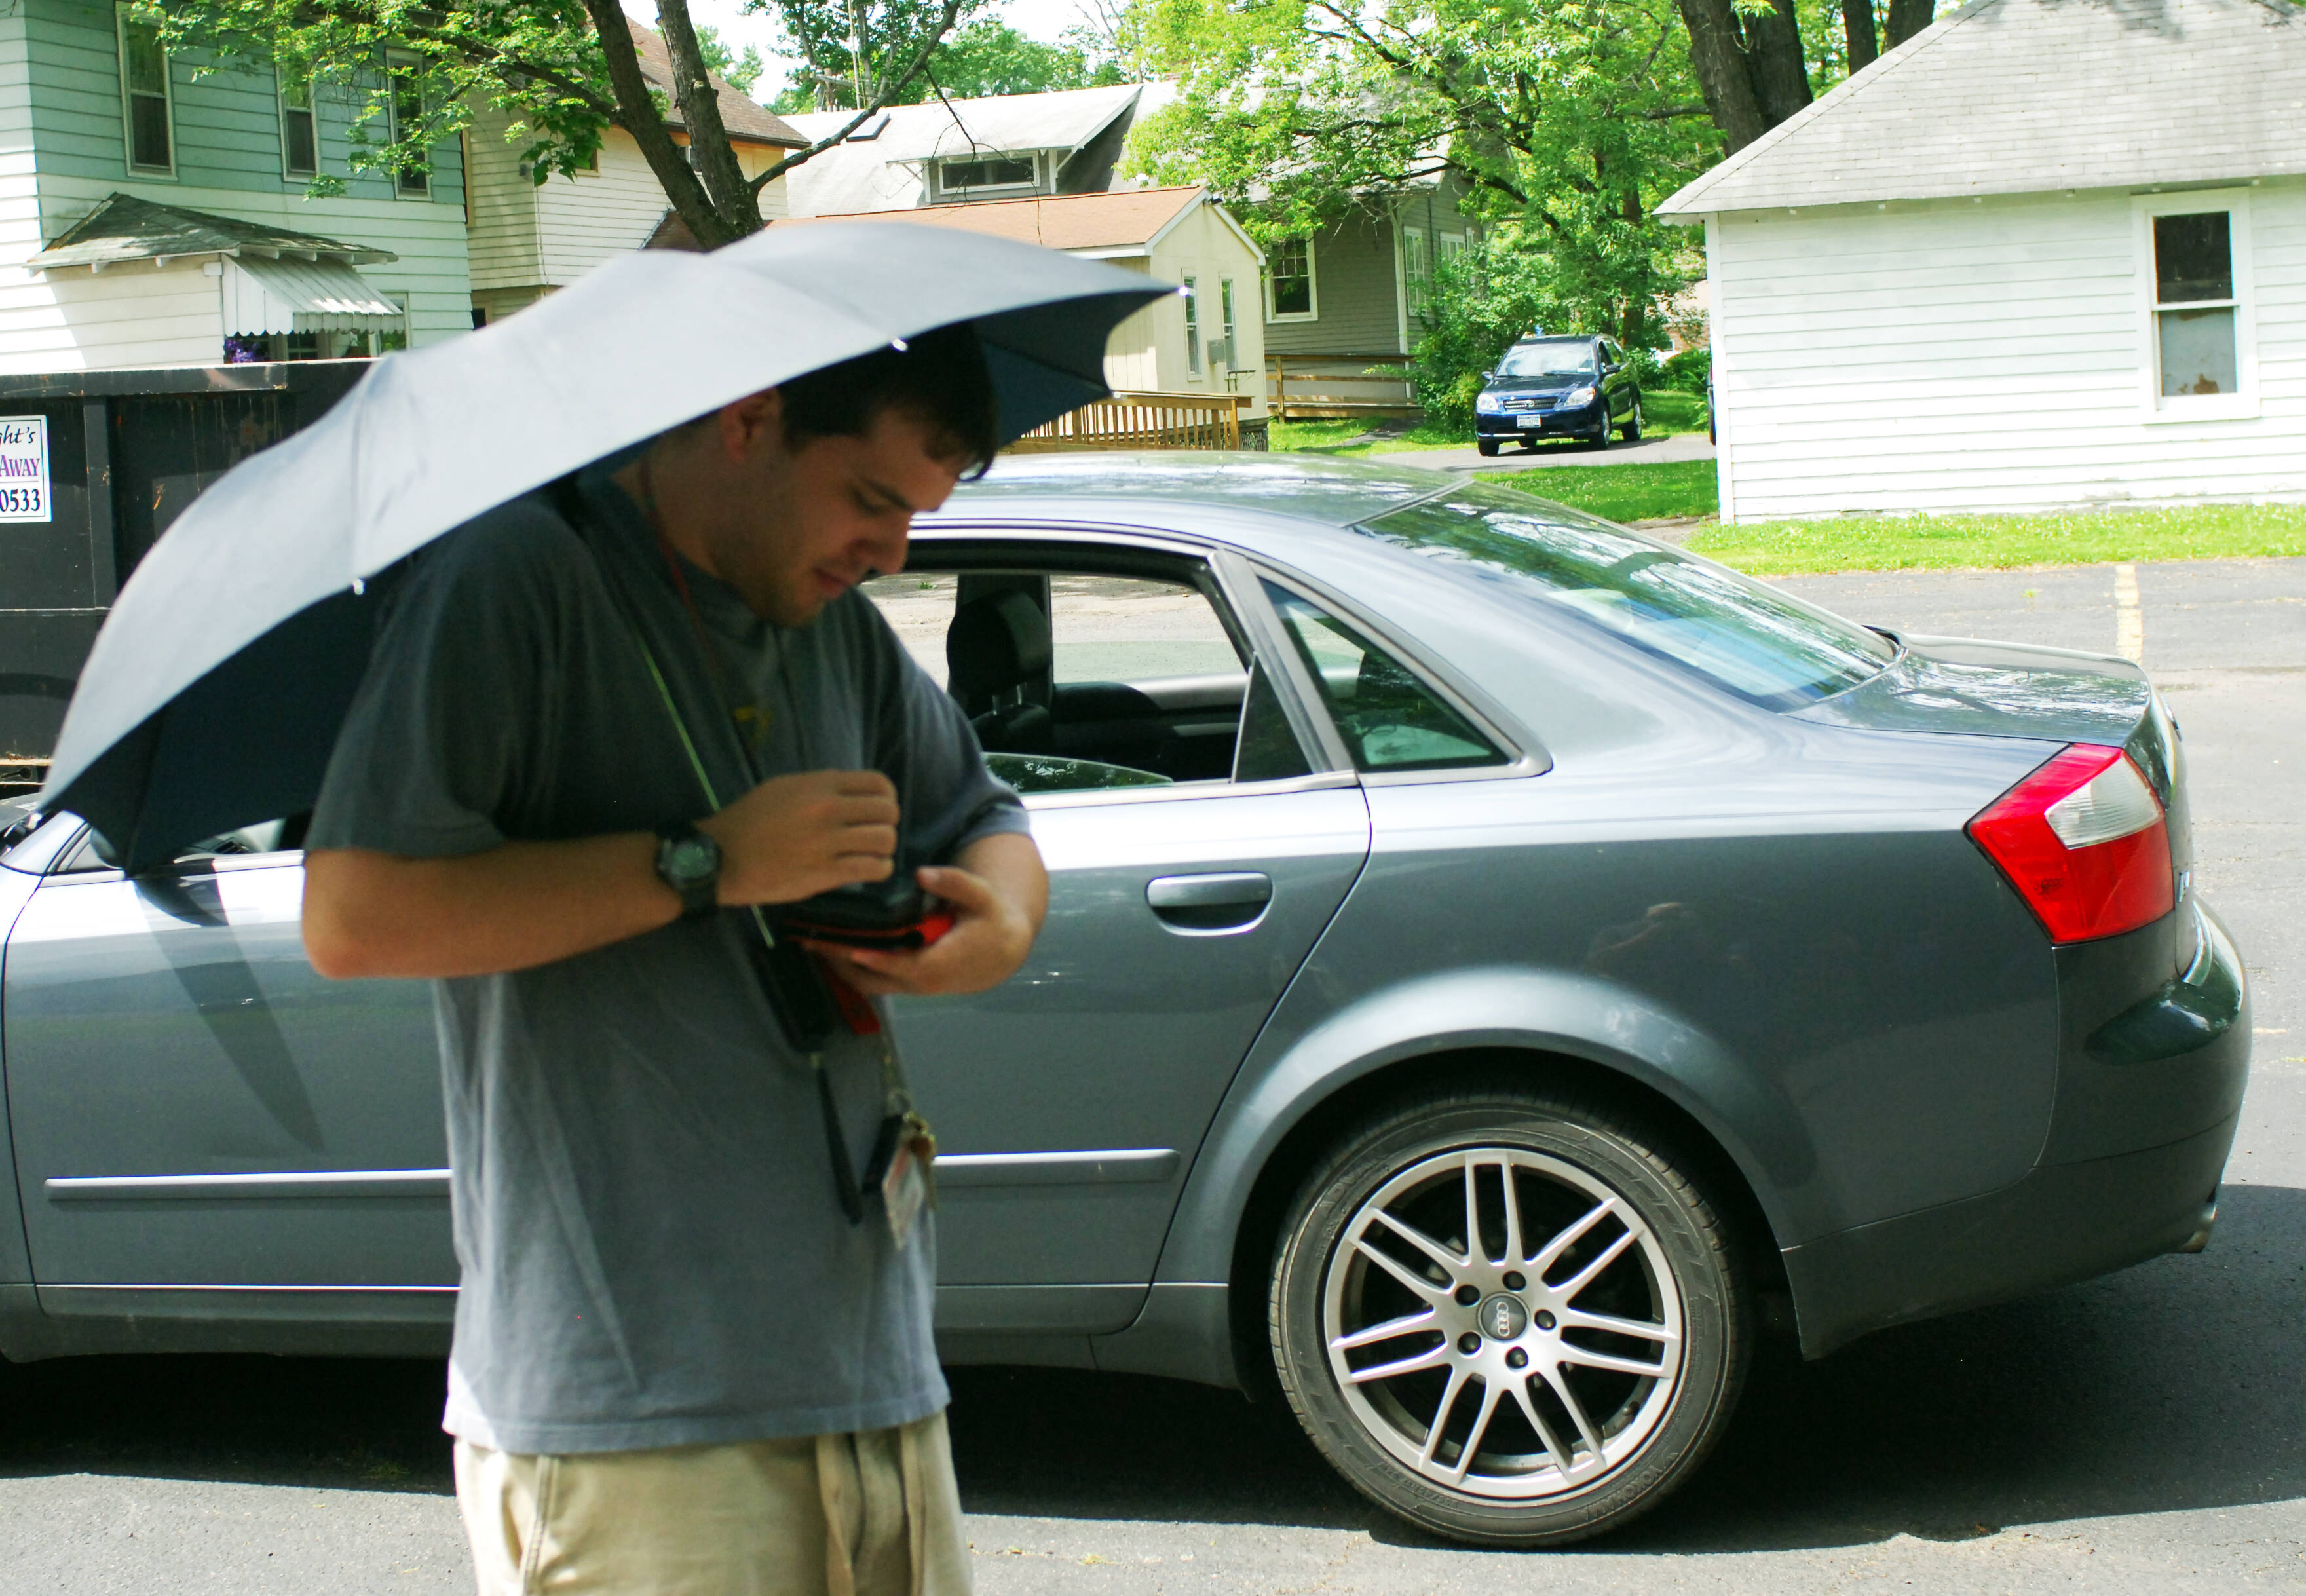 jeff with prototype outside car holding umbrella